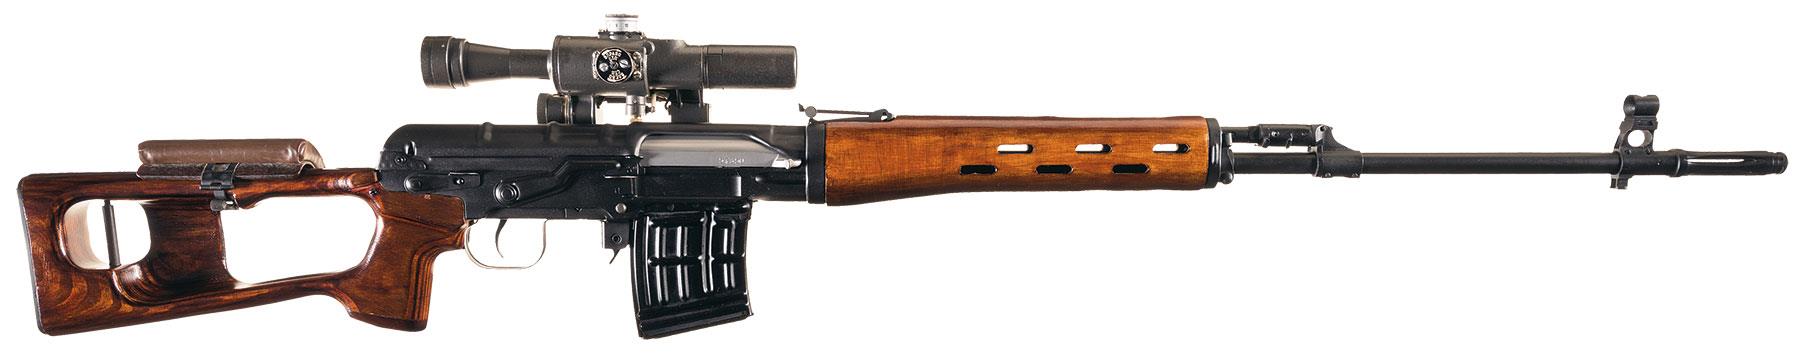 Wallpaper Classic, SVD, Dragunov sniper rifle images for 